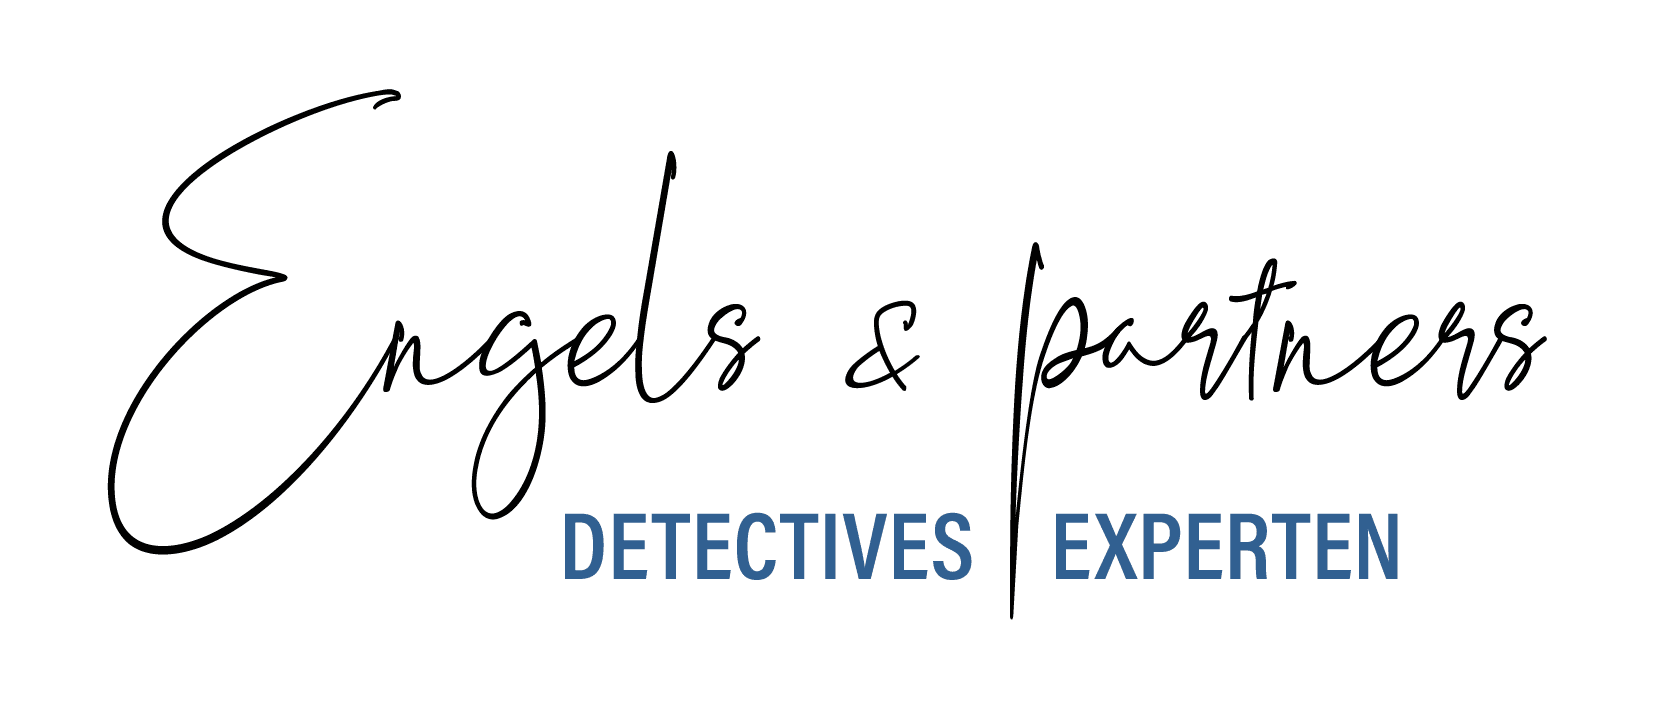 engels-en-partners-logo.png